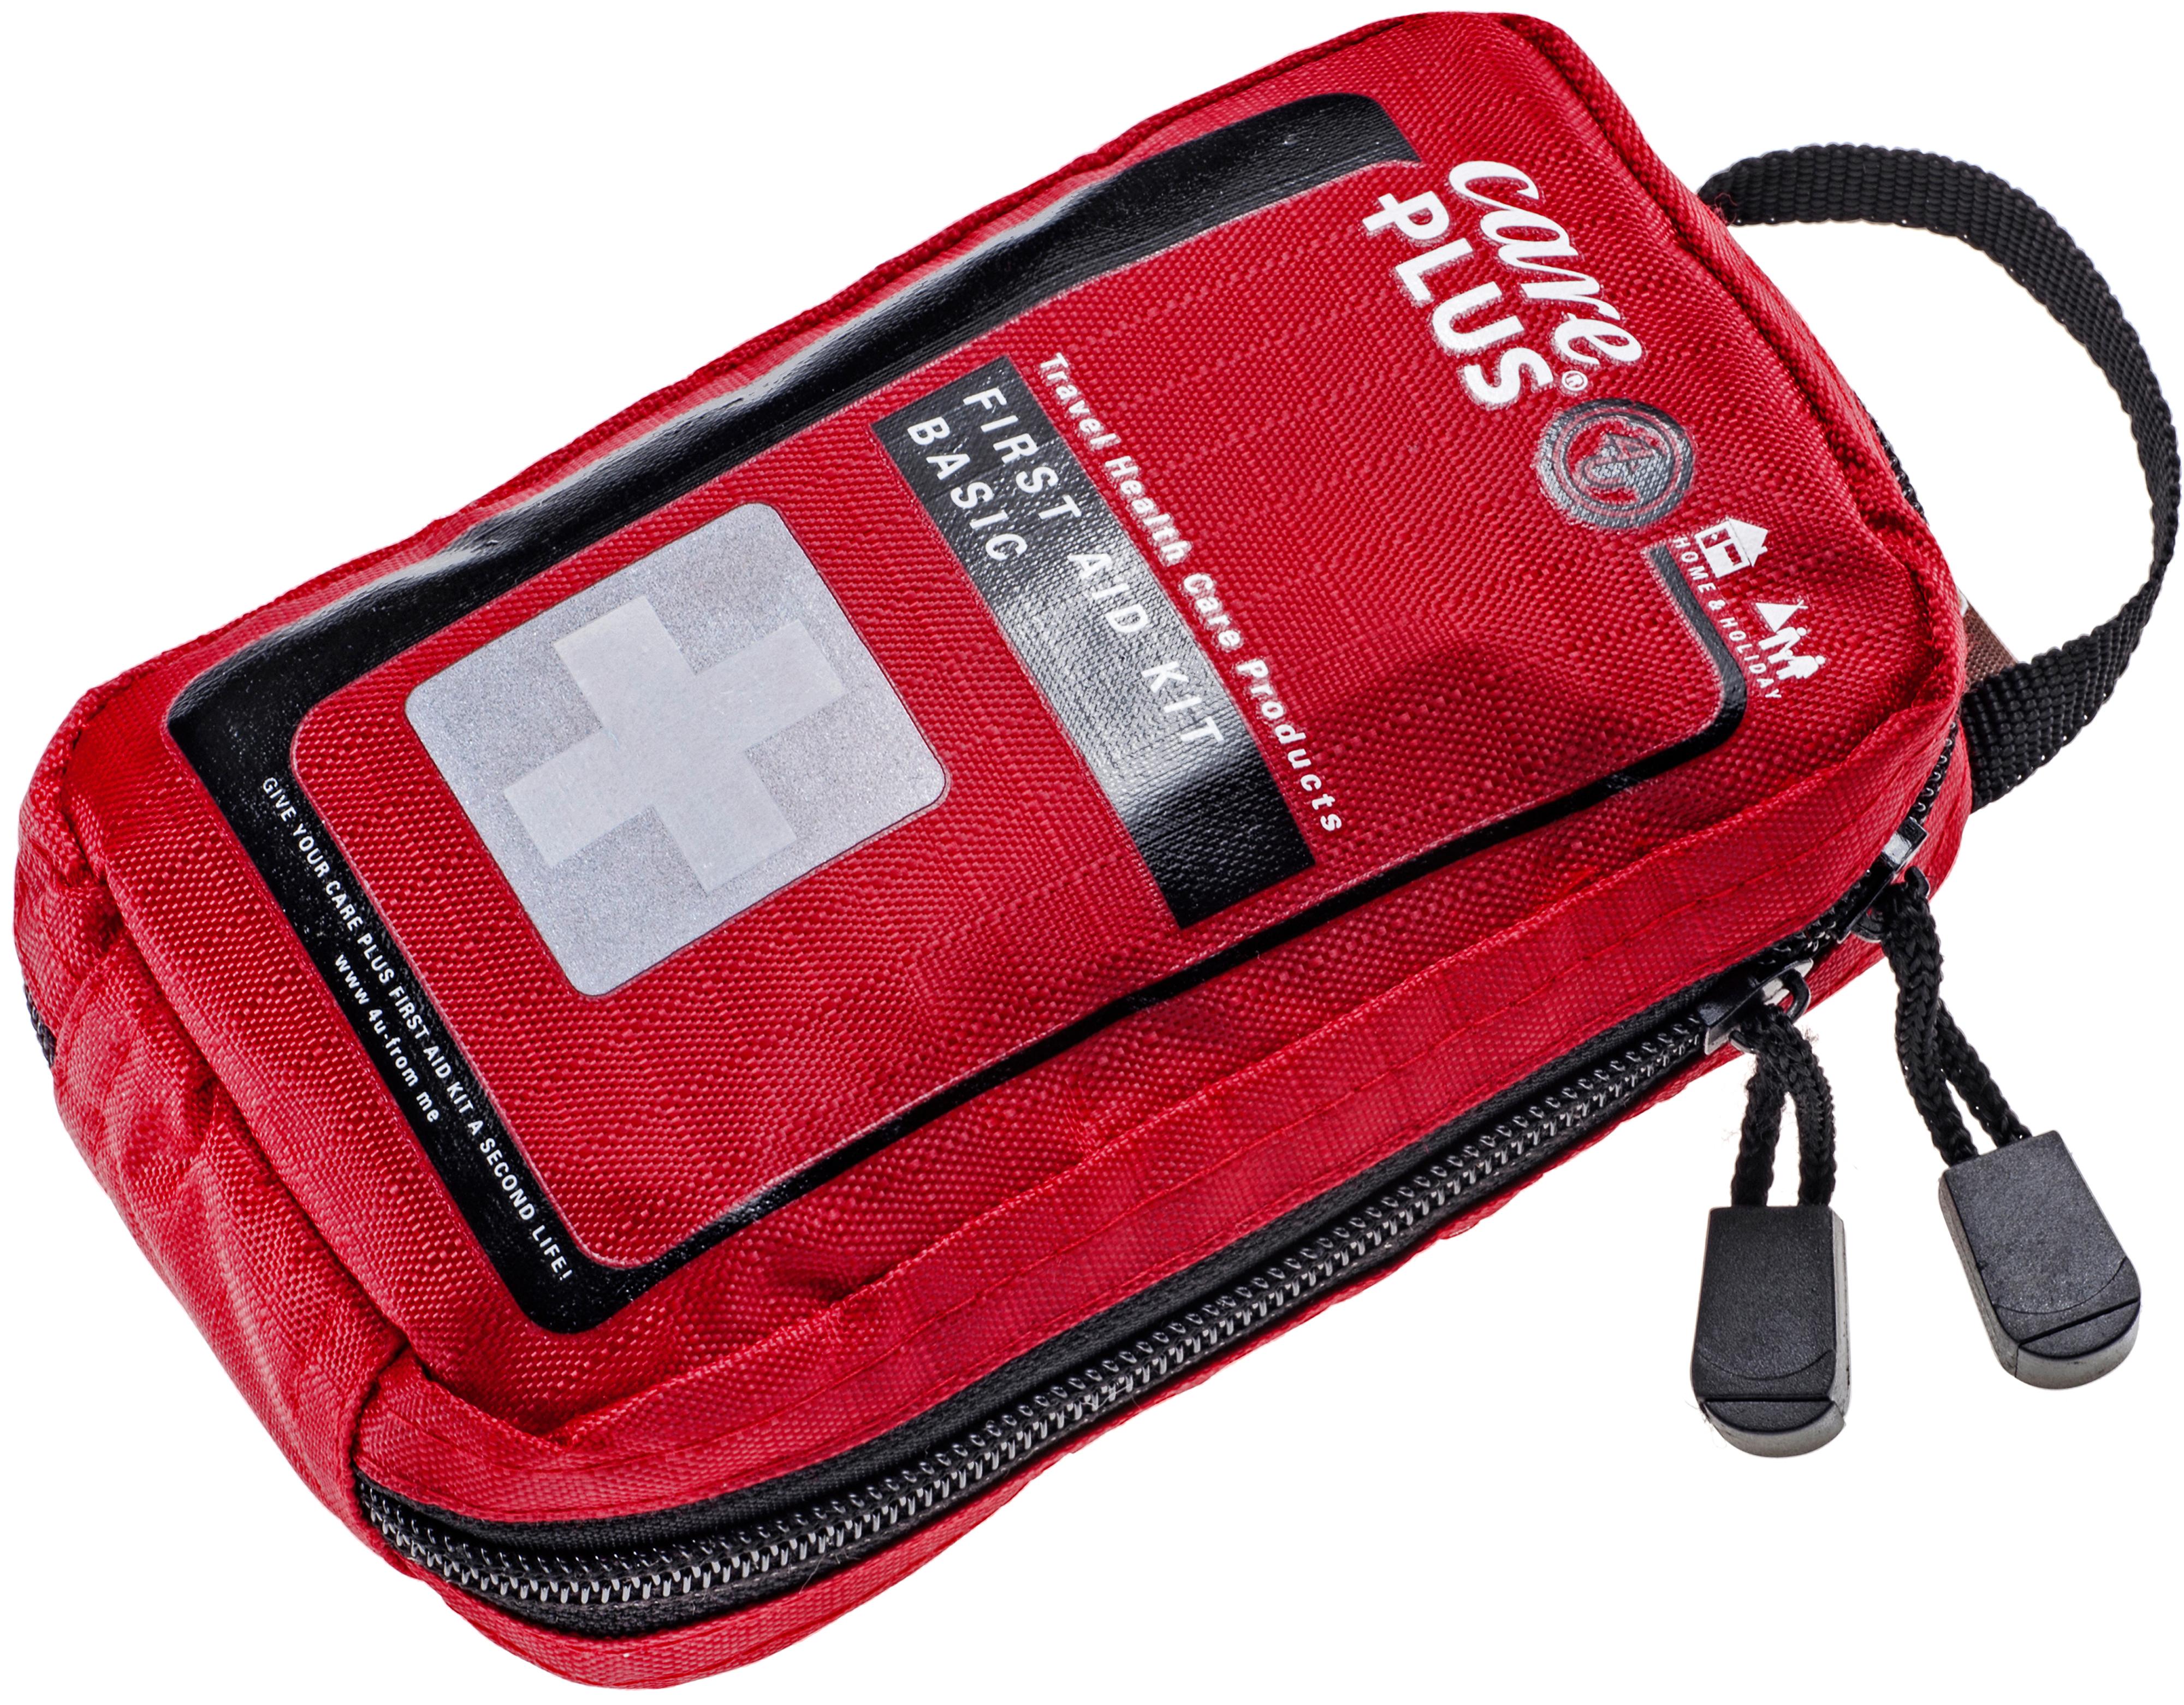 Image of Care Plus First Aid Kit Basic Erste Hilfe Set